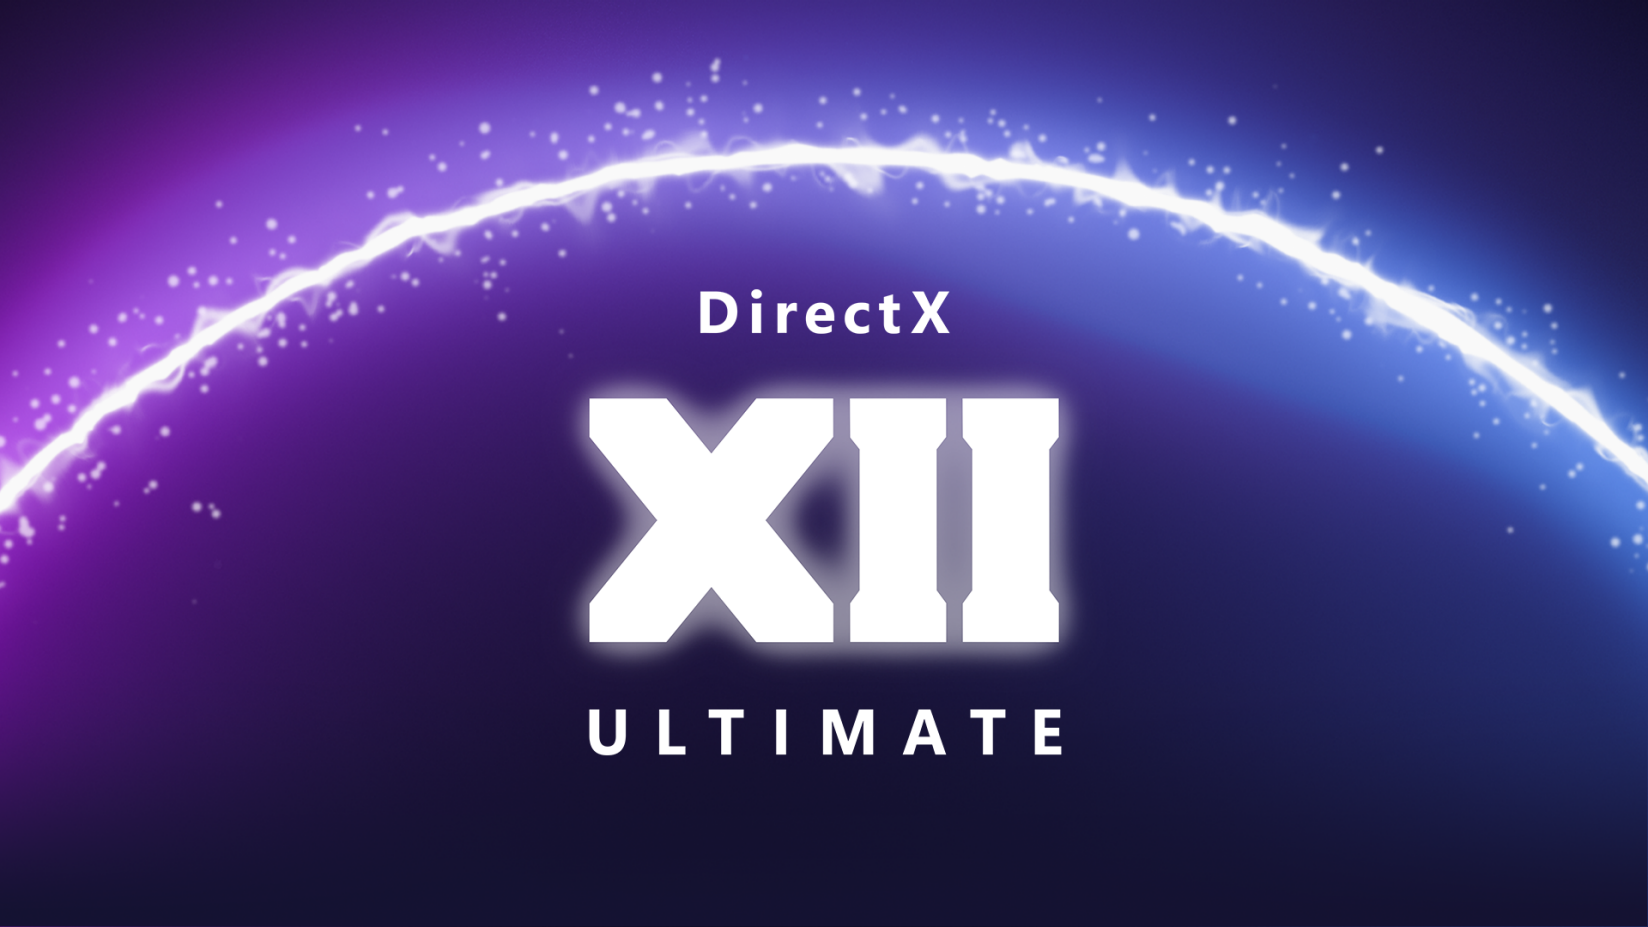 DirectX 12 ultimate